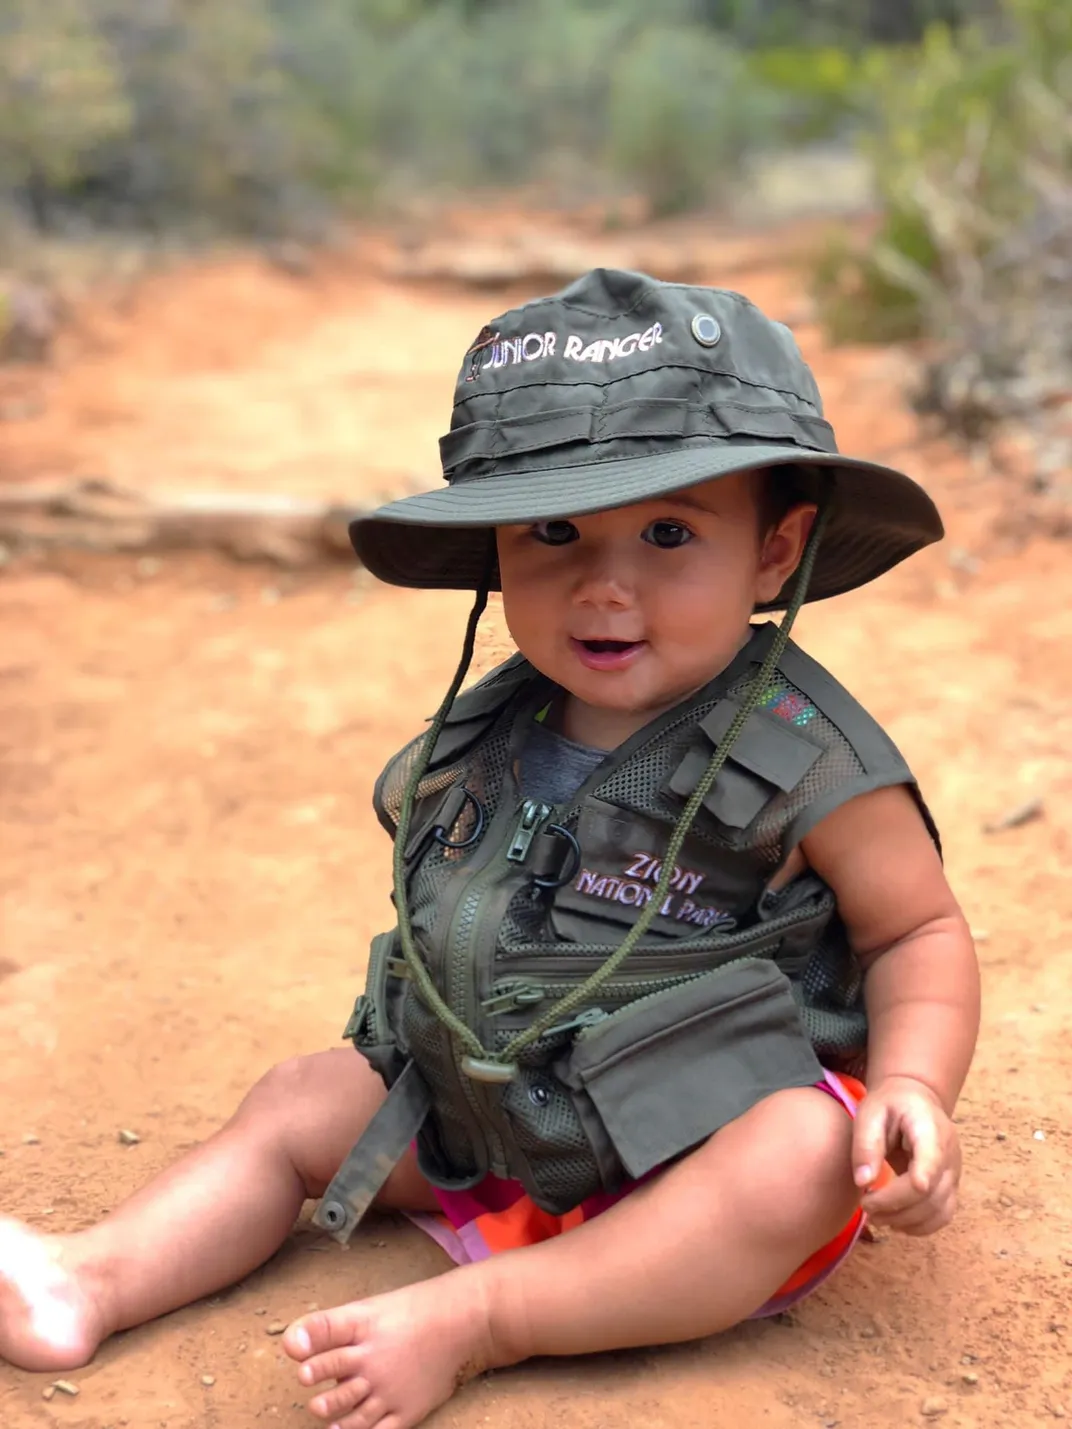 Toddler wearing park ranger outfit